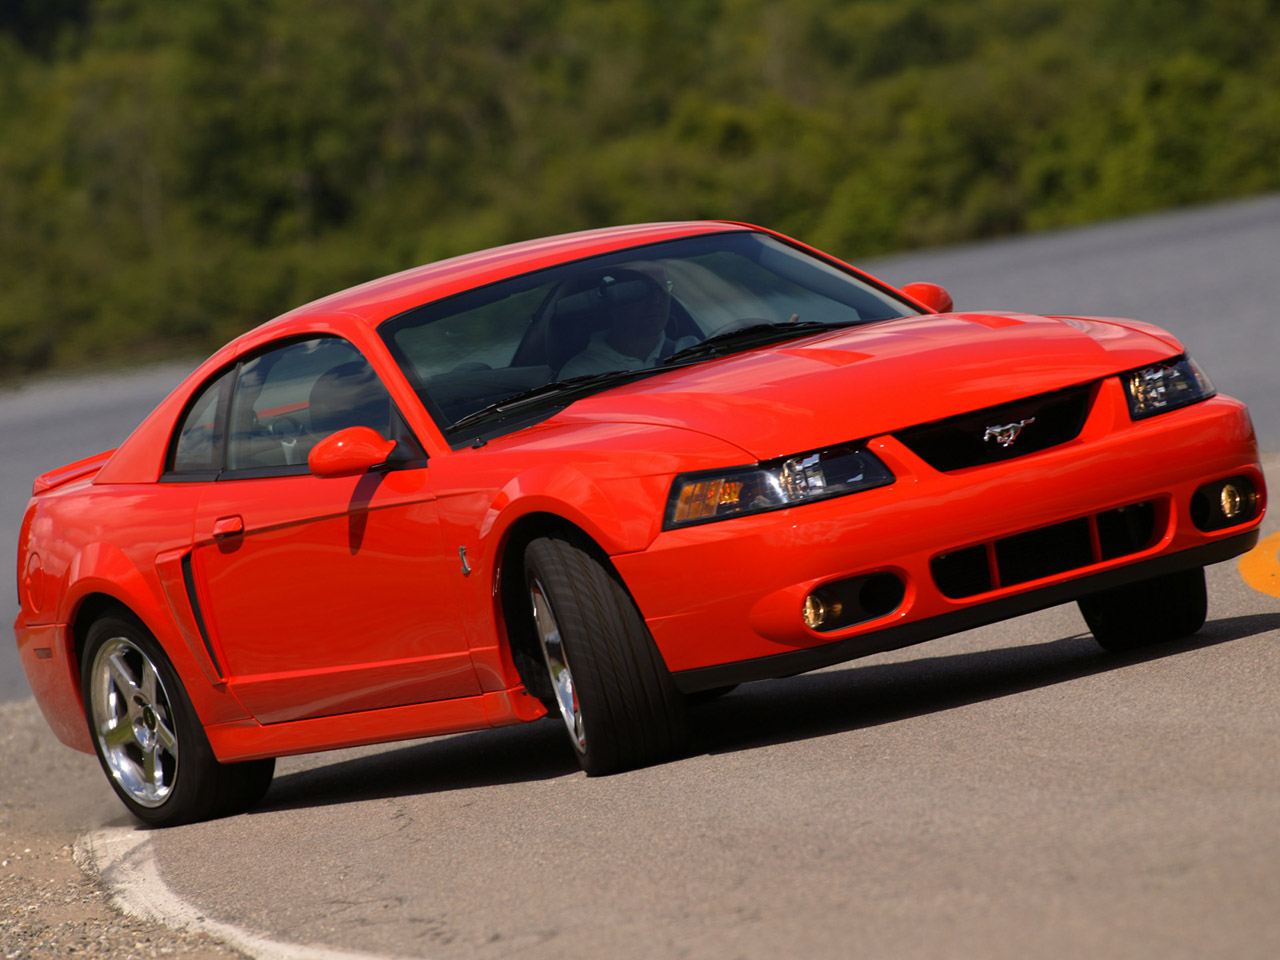 2004_Ford_SVT_Mustang_Cobra_Red_Angle_1280x960.jpg